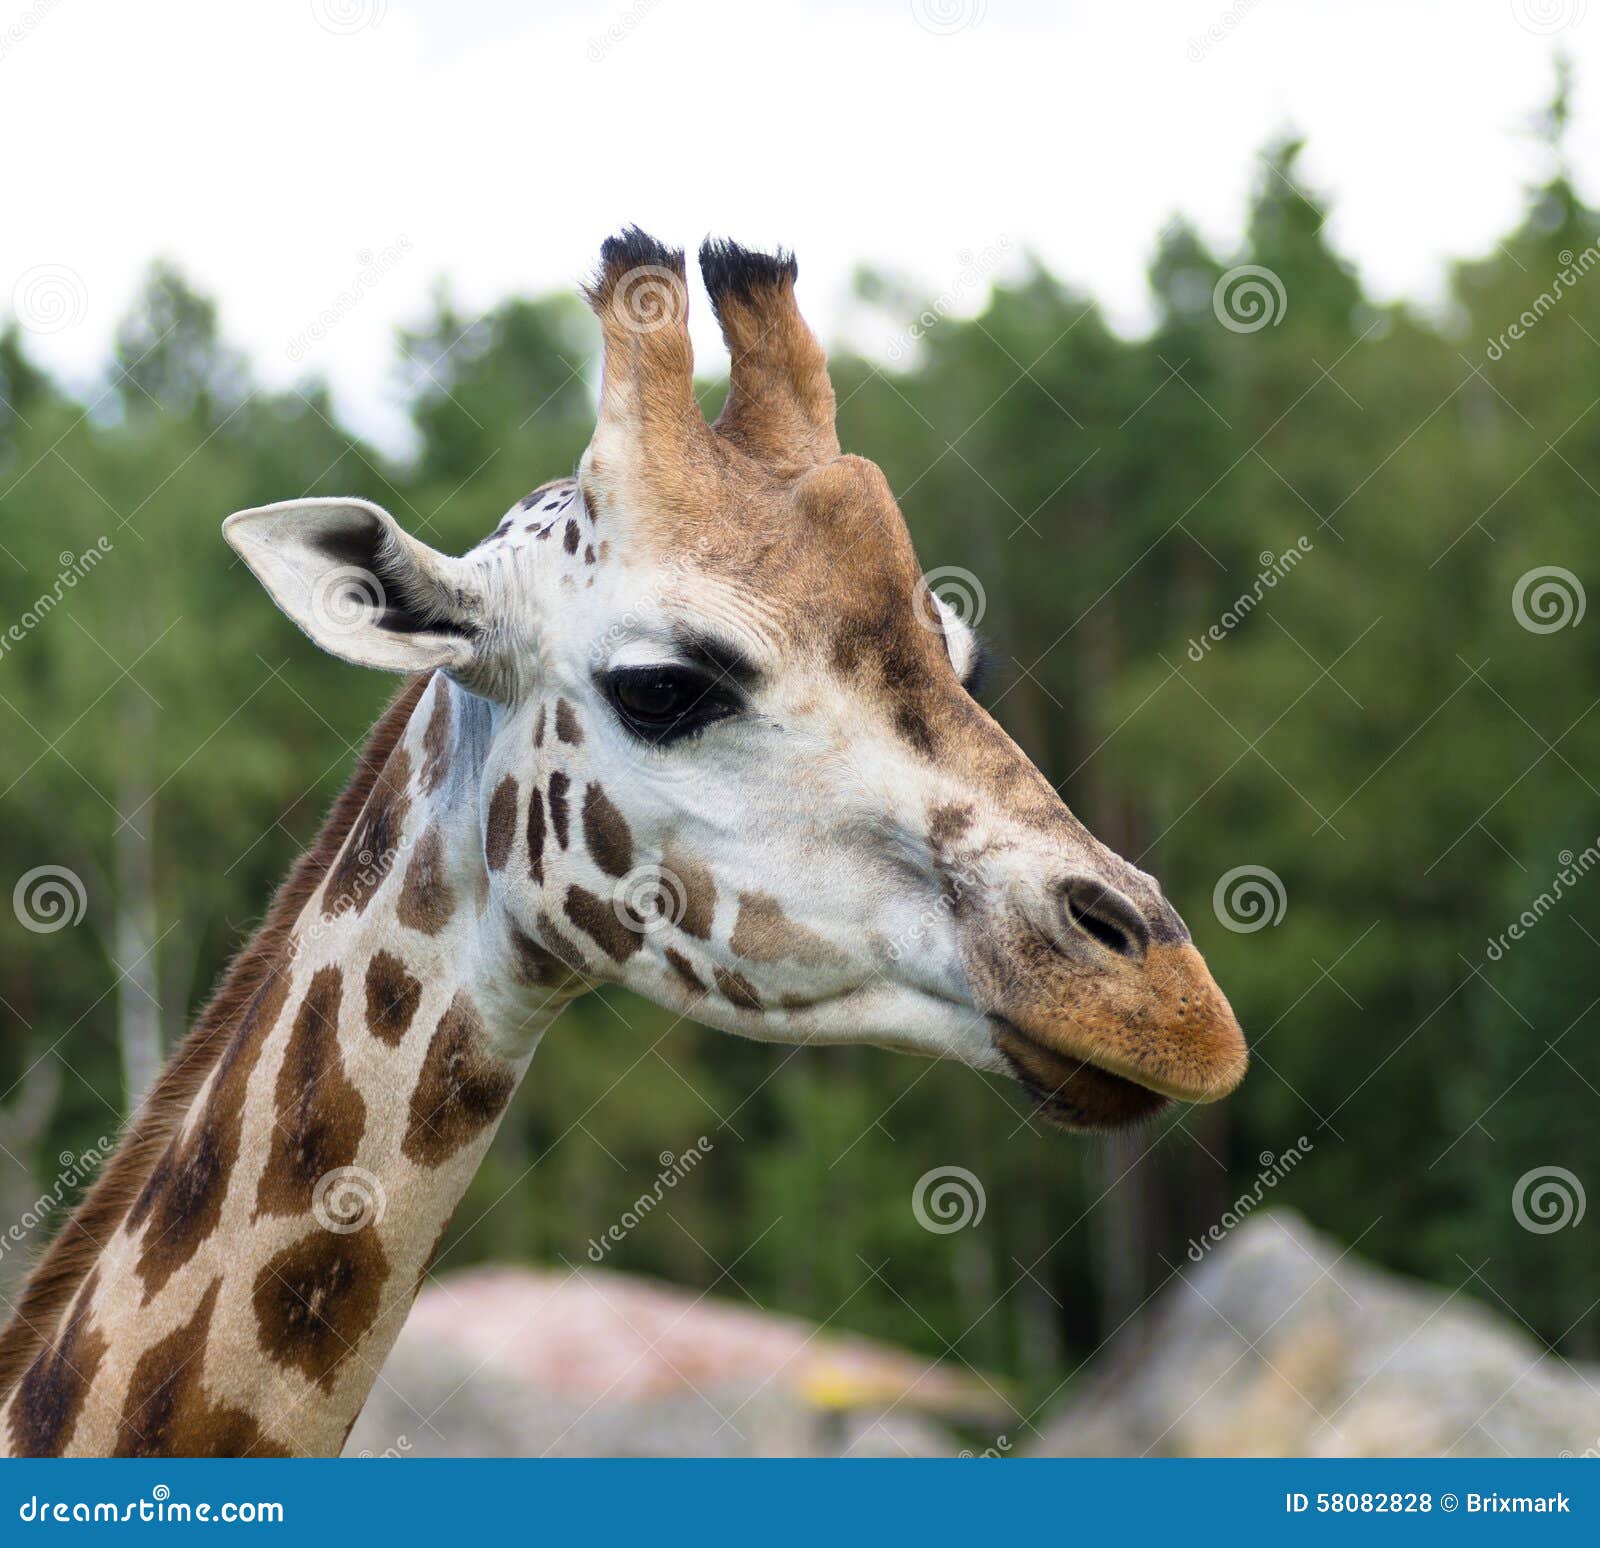 Retrato de um girafa adulto